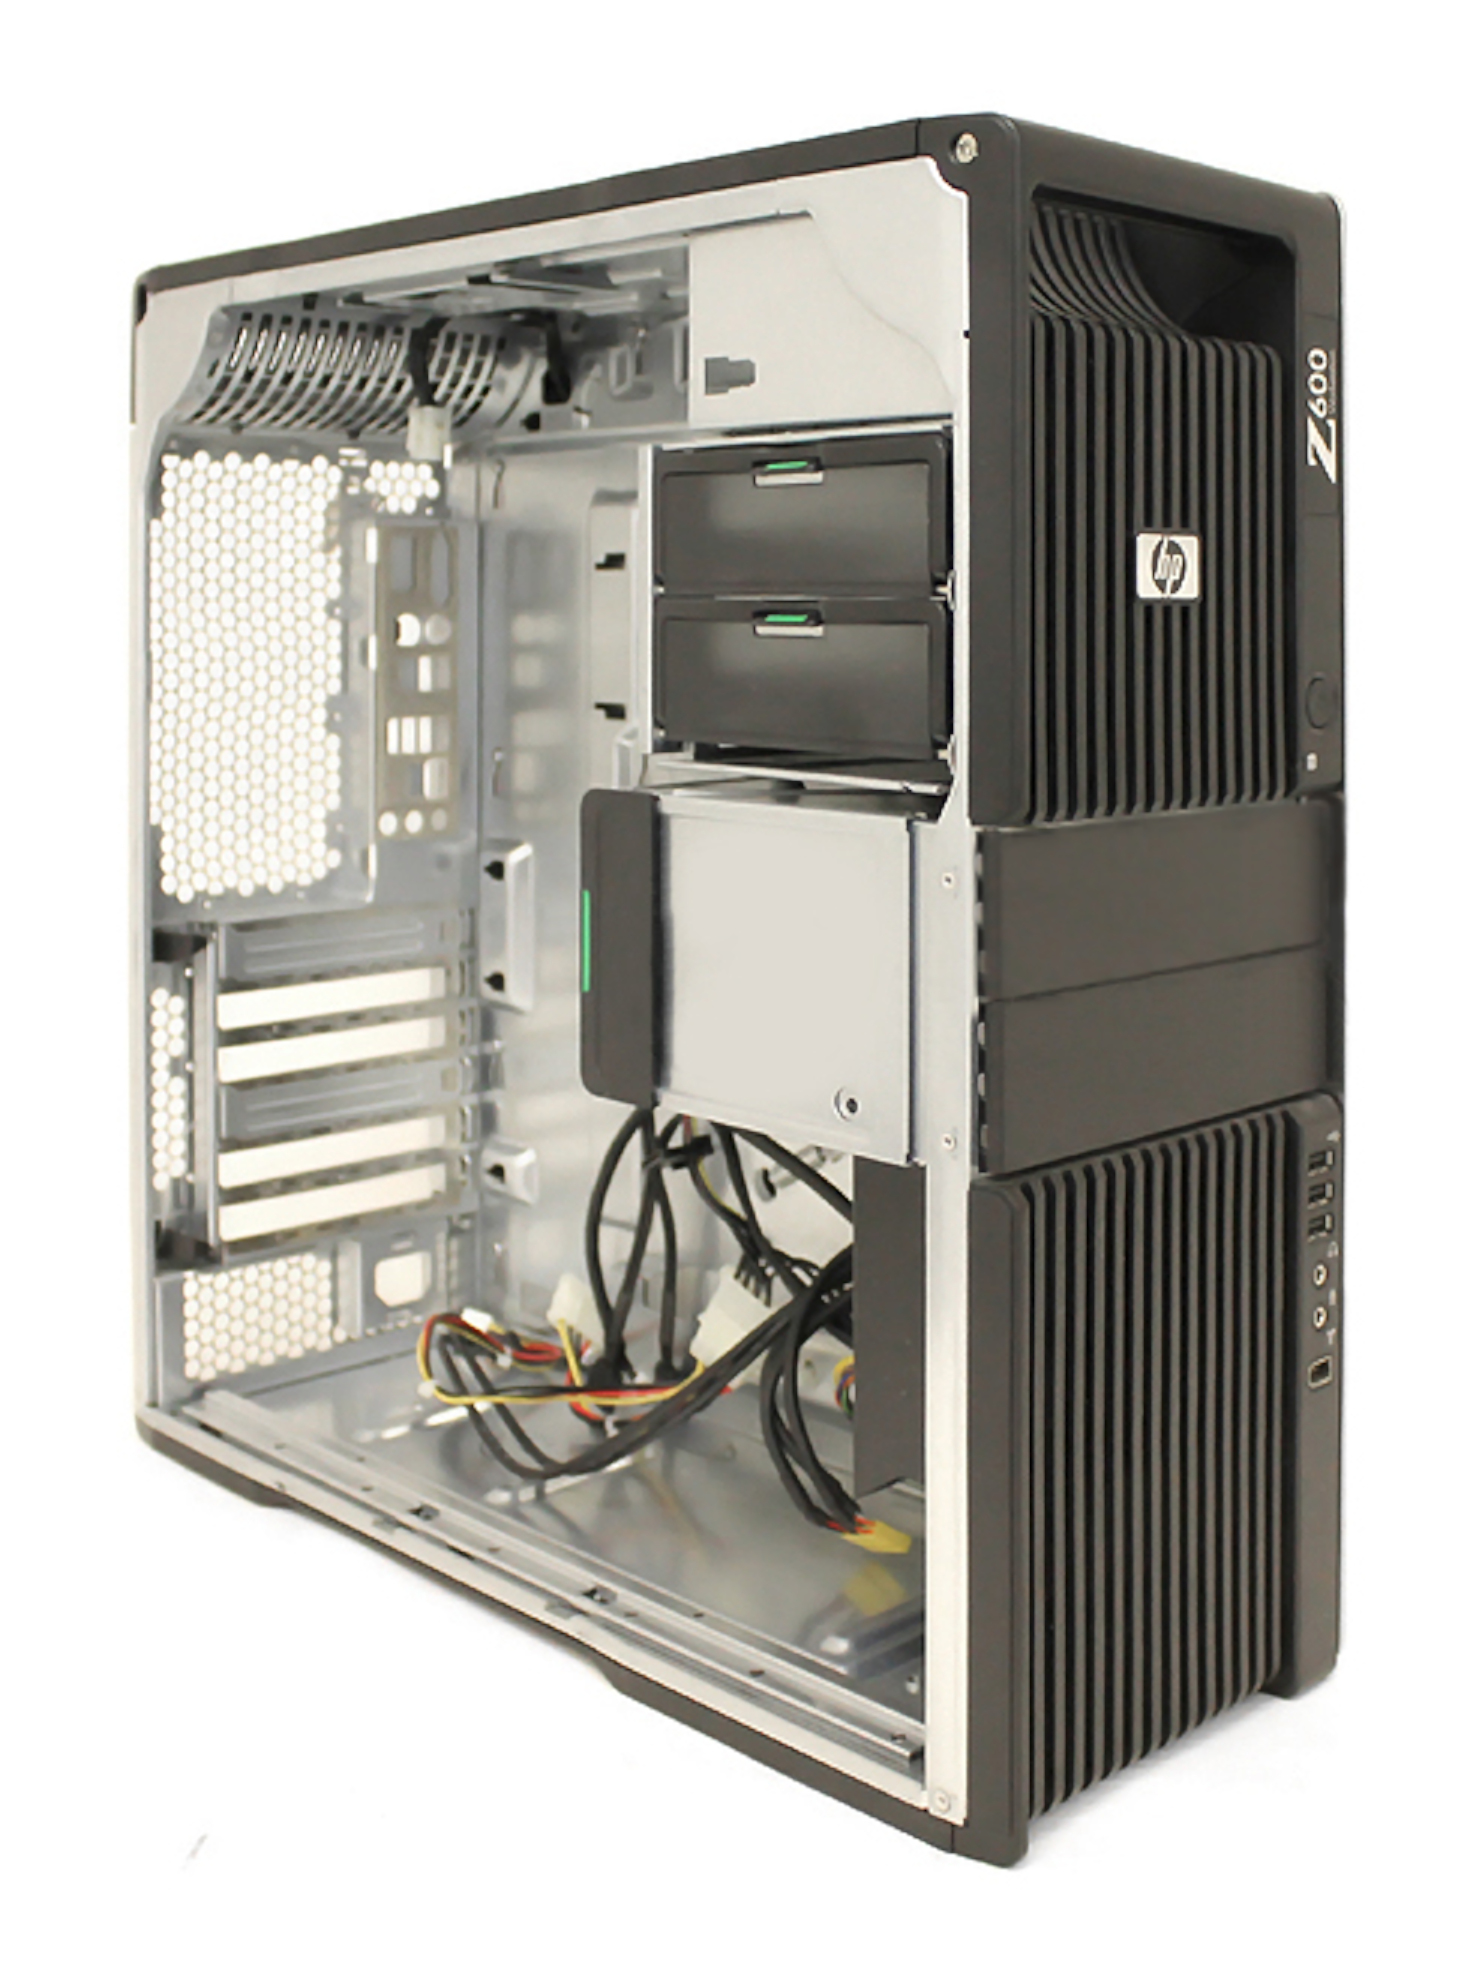 HP Z600 Workstation Case Chassis Barebone Internal Cables + PSU 650W 468624-002